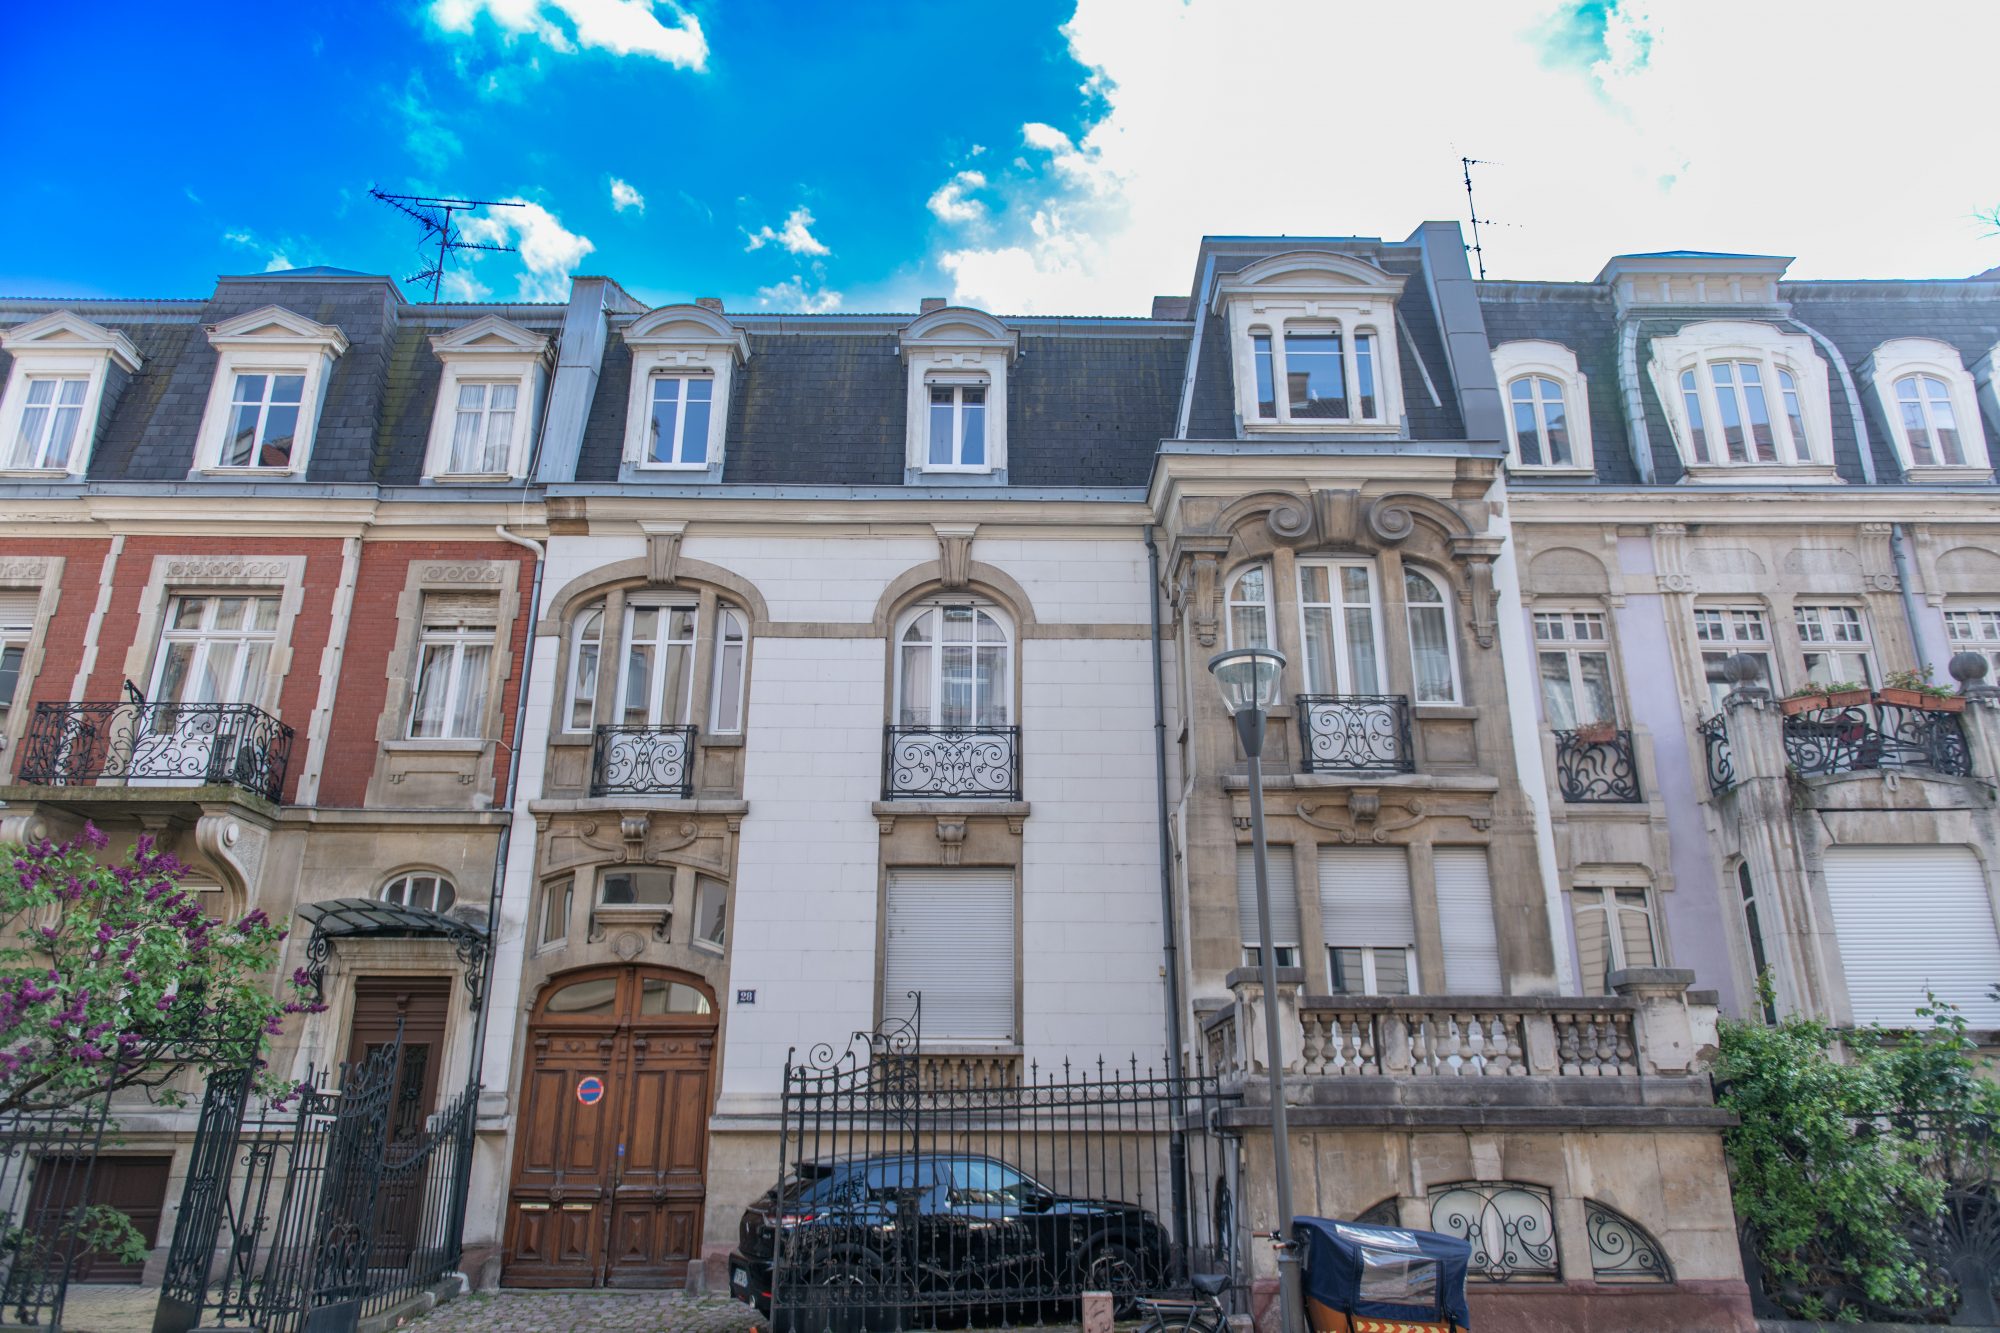 4 pièces avec terrasse - achat appartement Strasbourg - Bintz Immobilier - 13